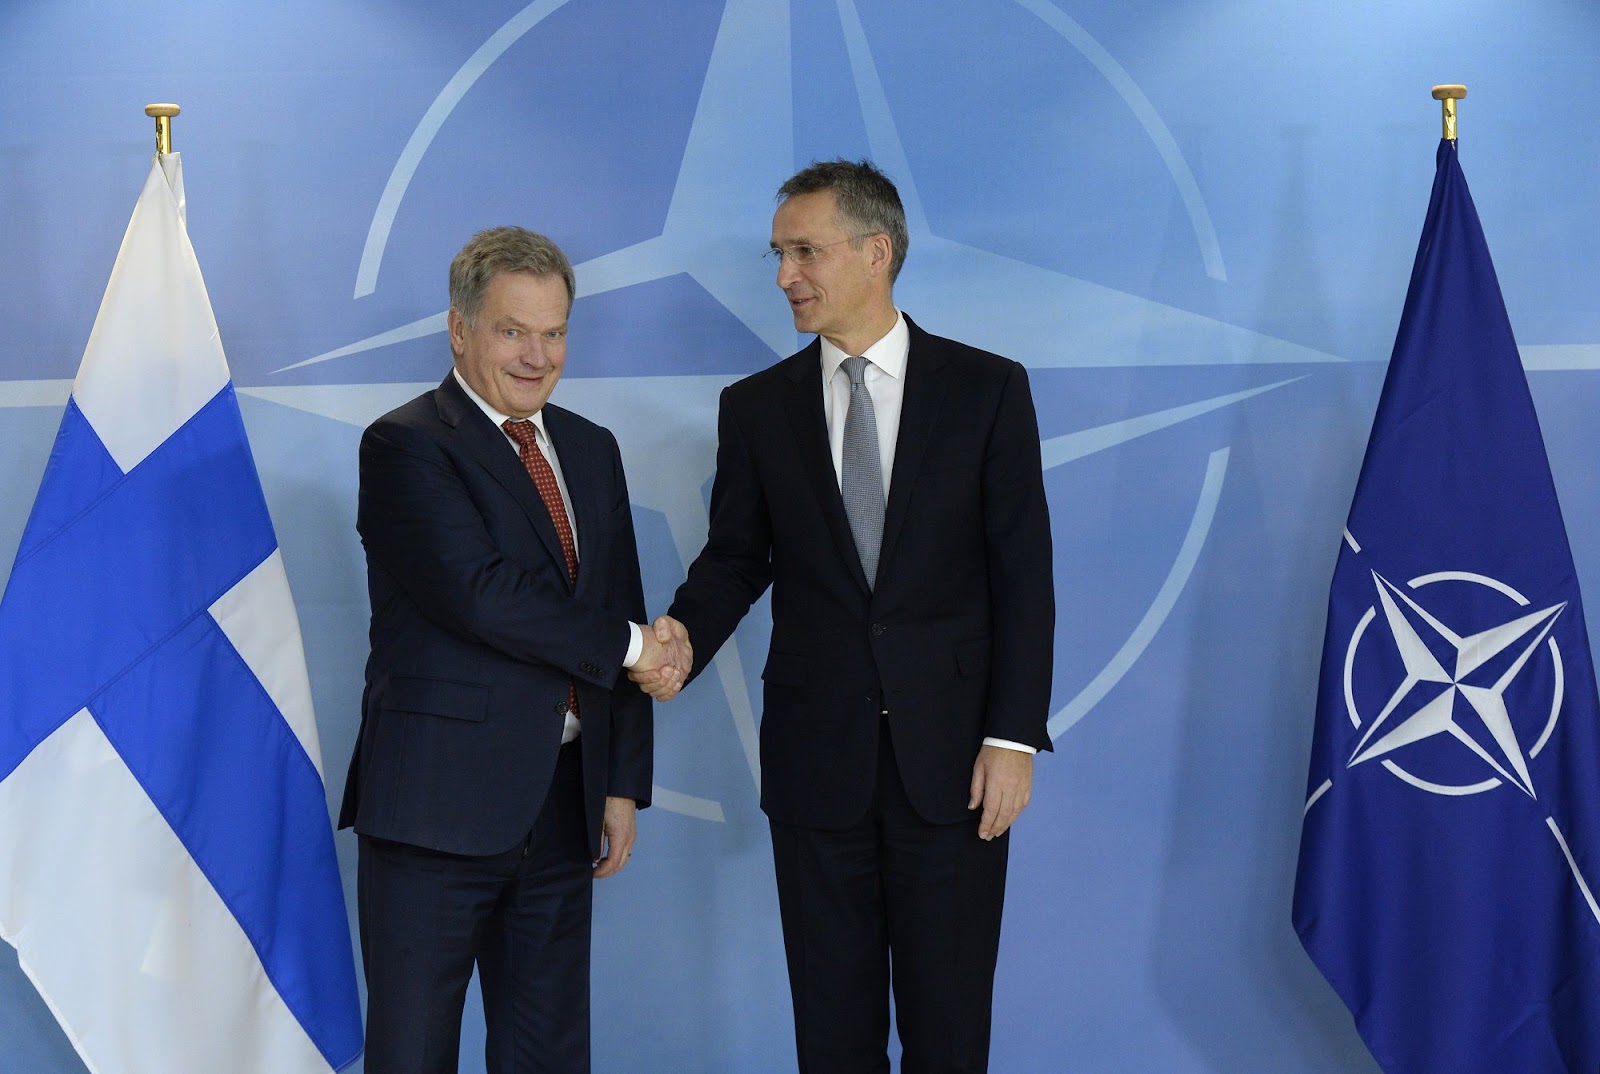 Sauli Niinisto, the president of Finland with Nato Secretary-General Jens Stoltenberg